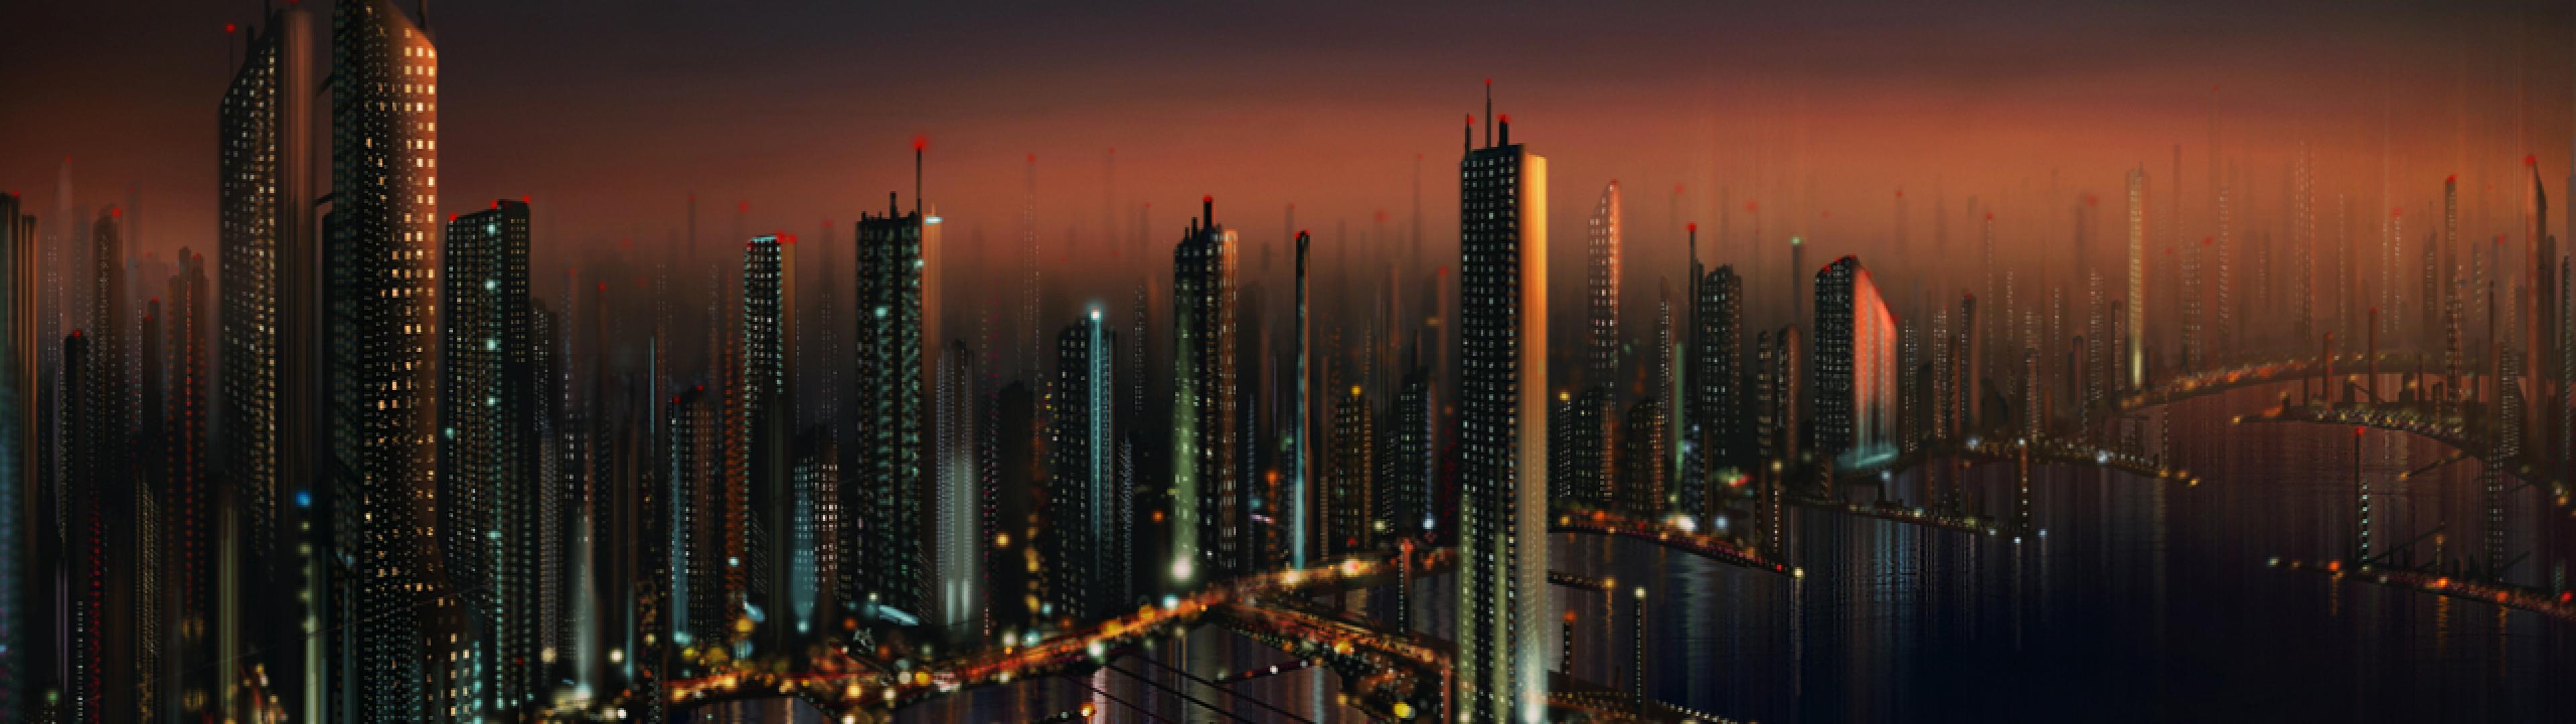 Future Cityscape Architecture Ultra Or Dual High Definition